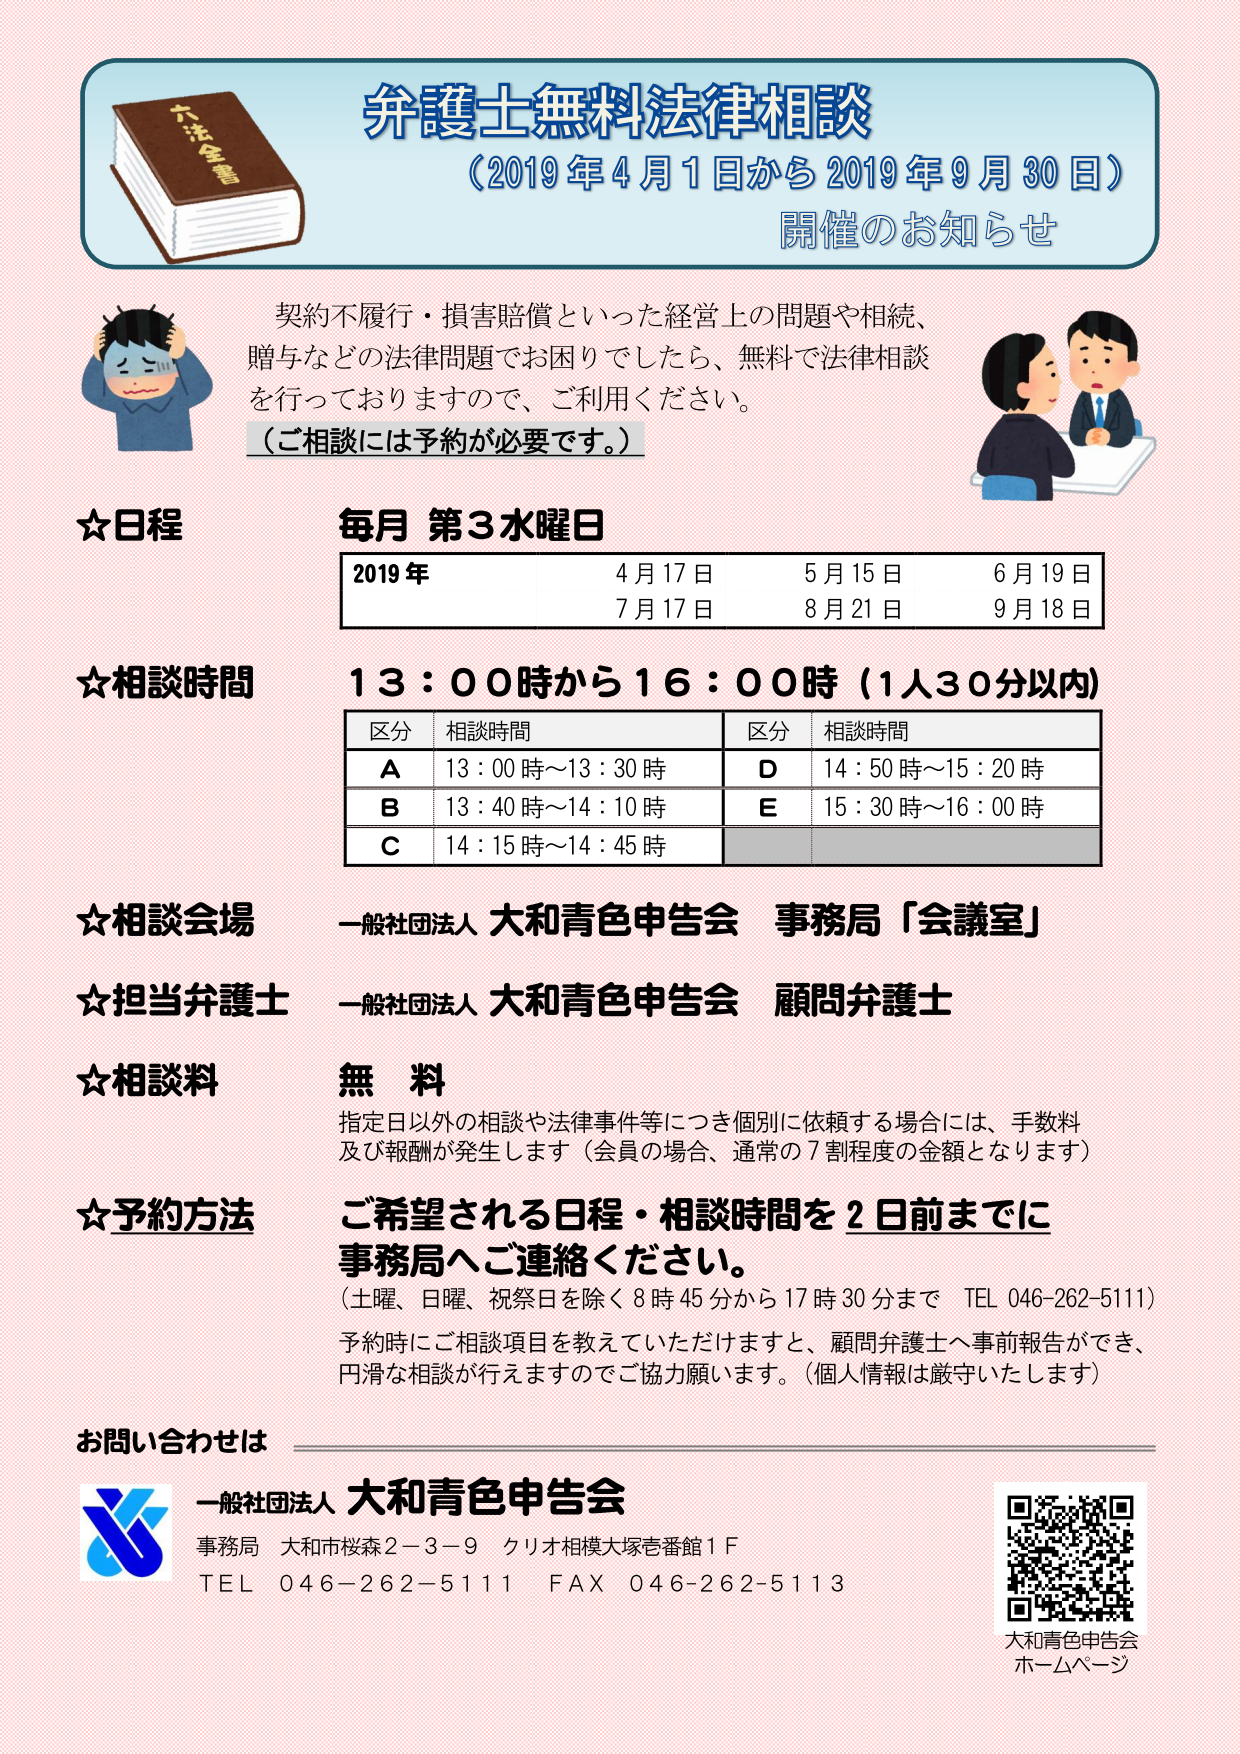 http://www.shokonet.or.jp/aoiro/yamato/news/leagal_consultation_2019_first_half.png